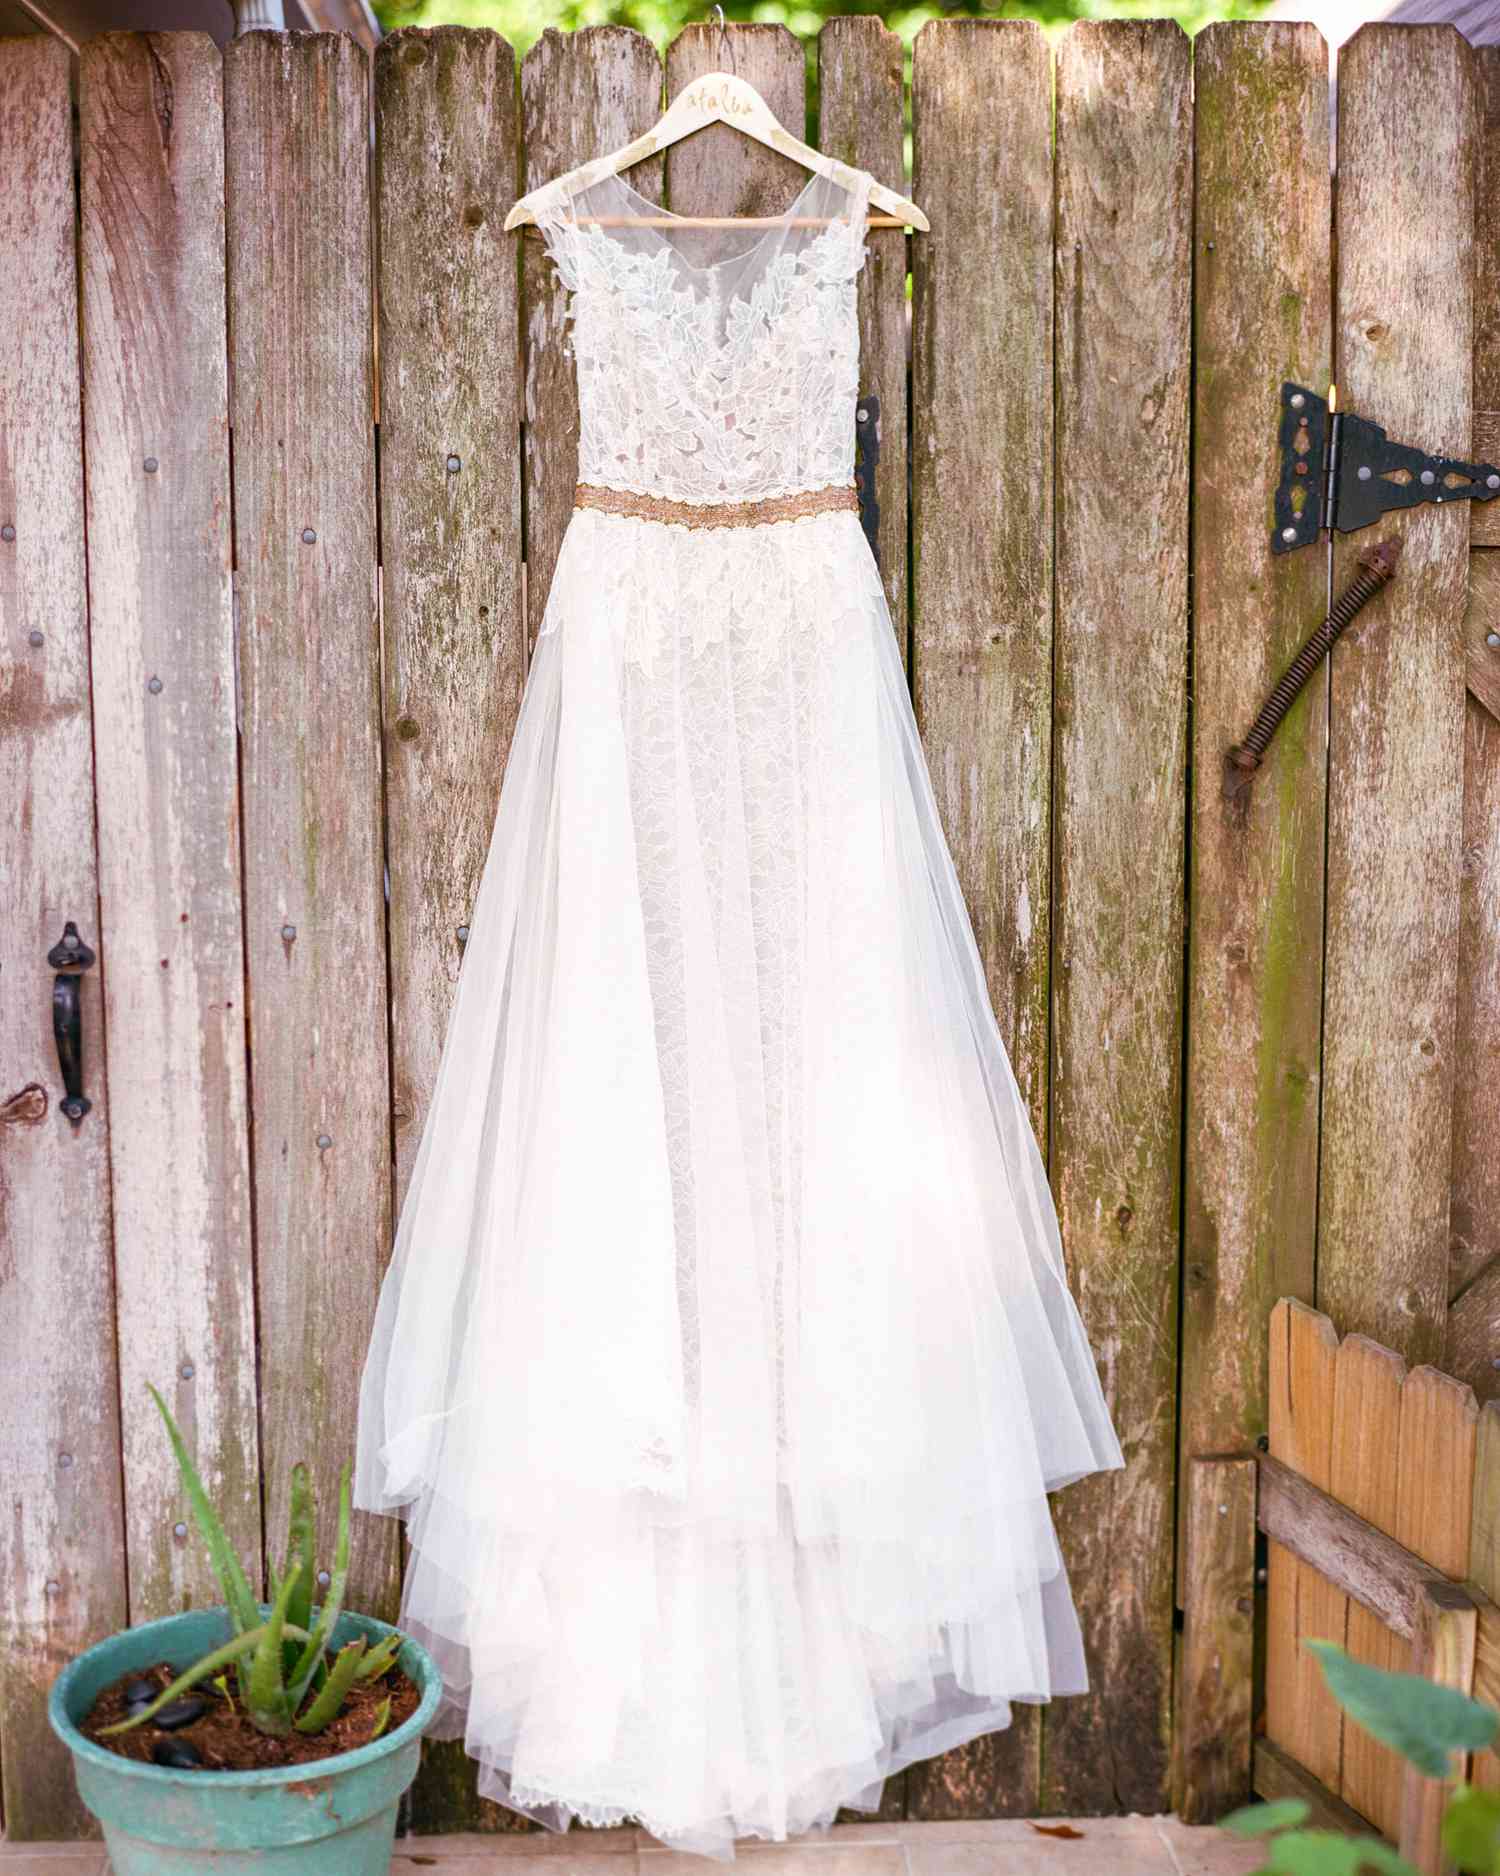 atalia-raul-wedding-dress-4-s112395-1215.jpg